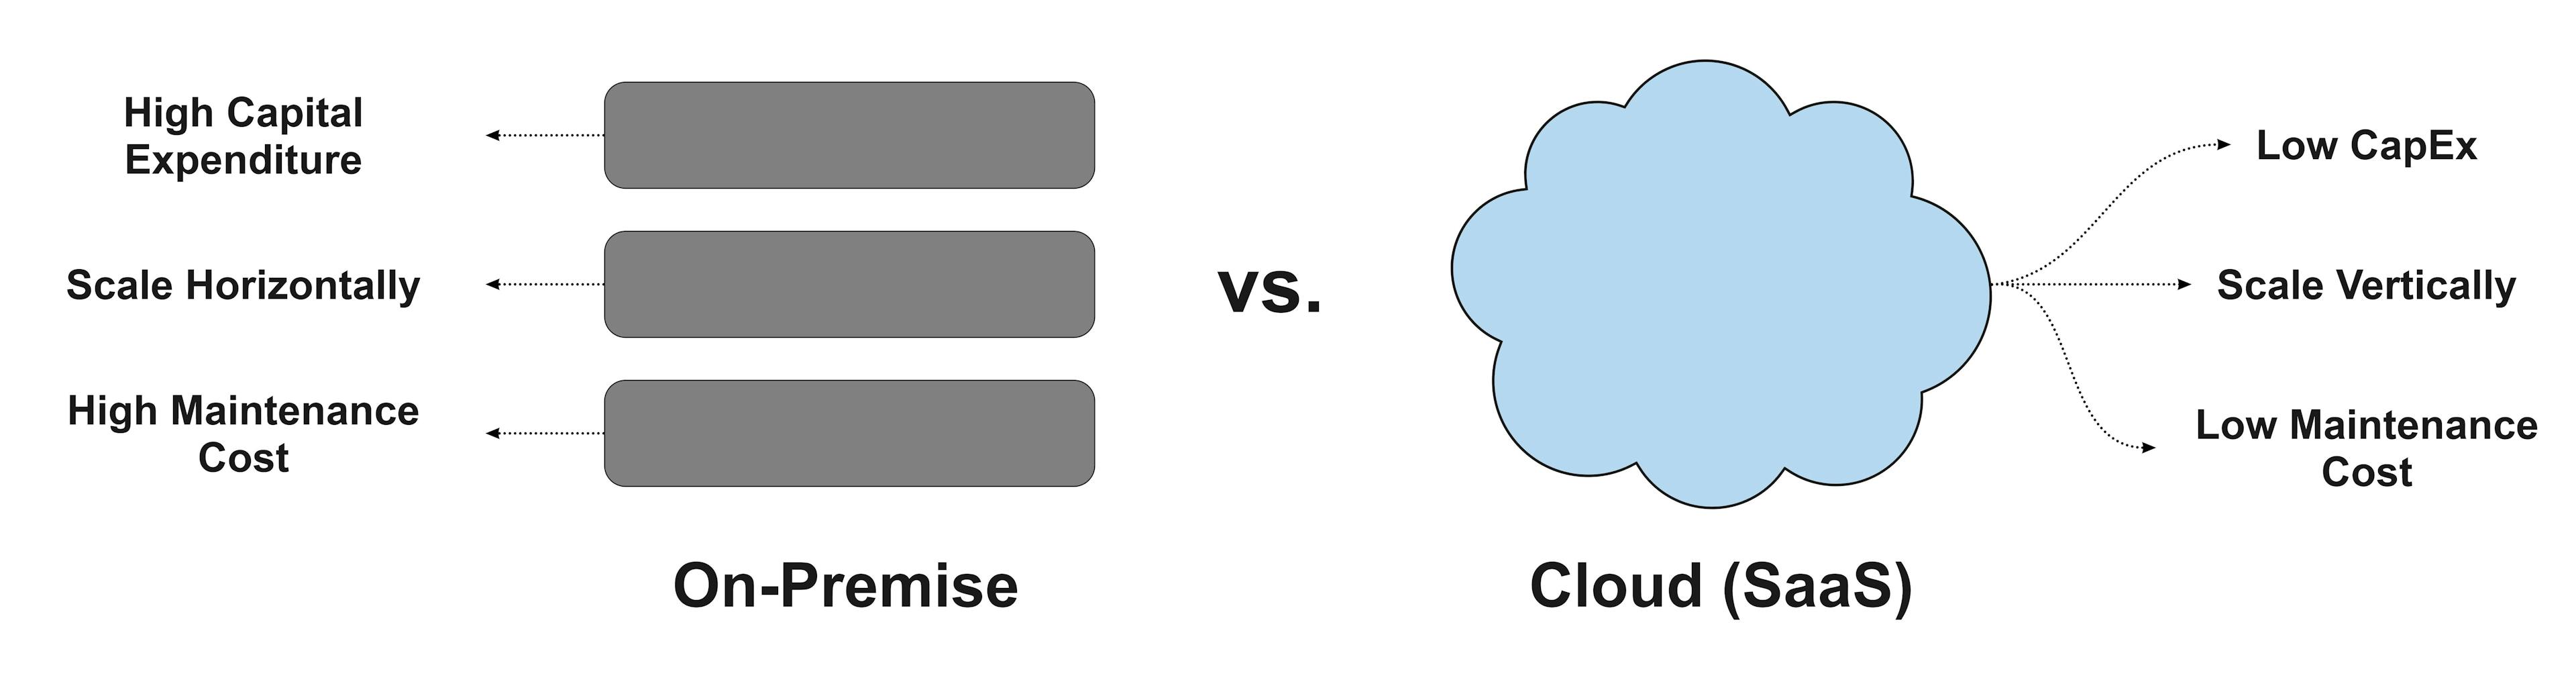 Image of on-premise vs. cloud benefits